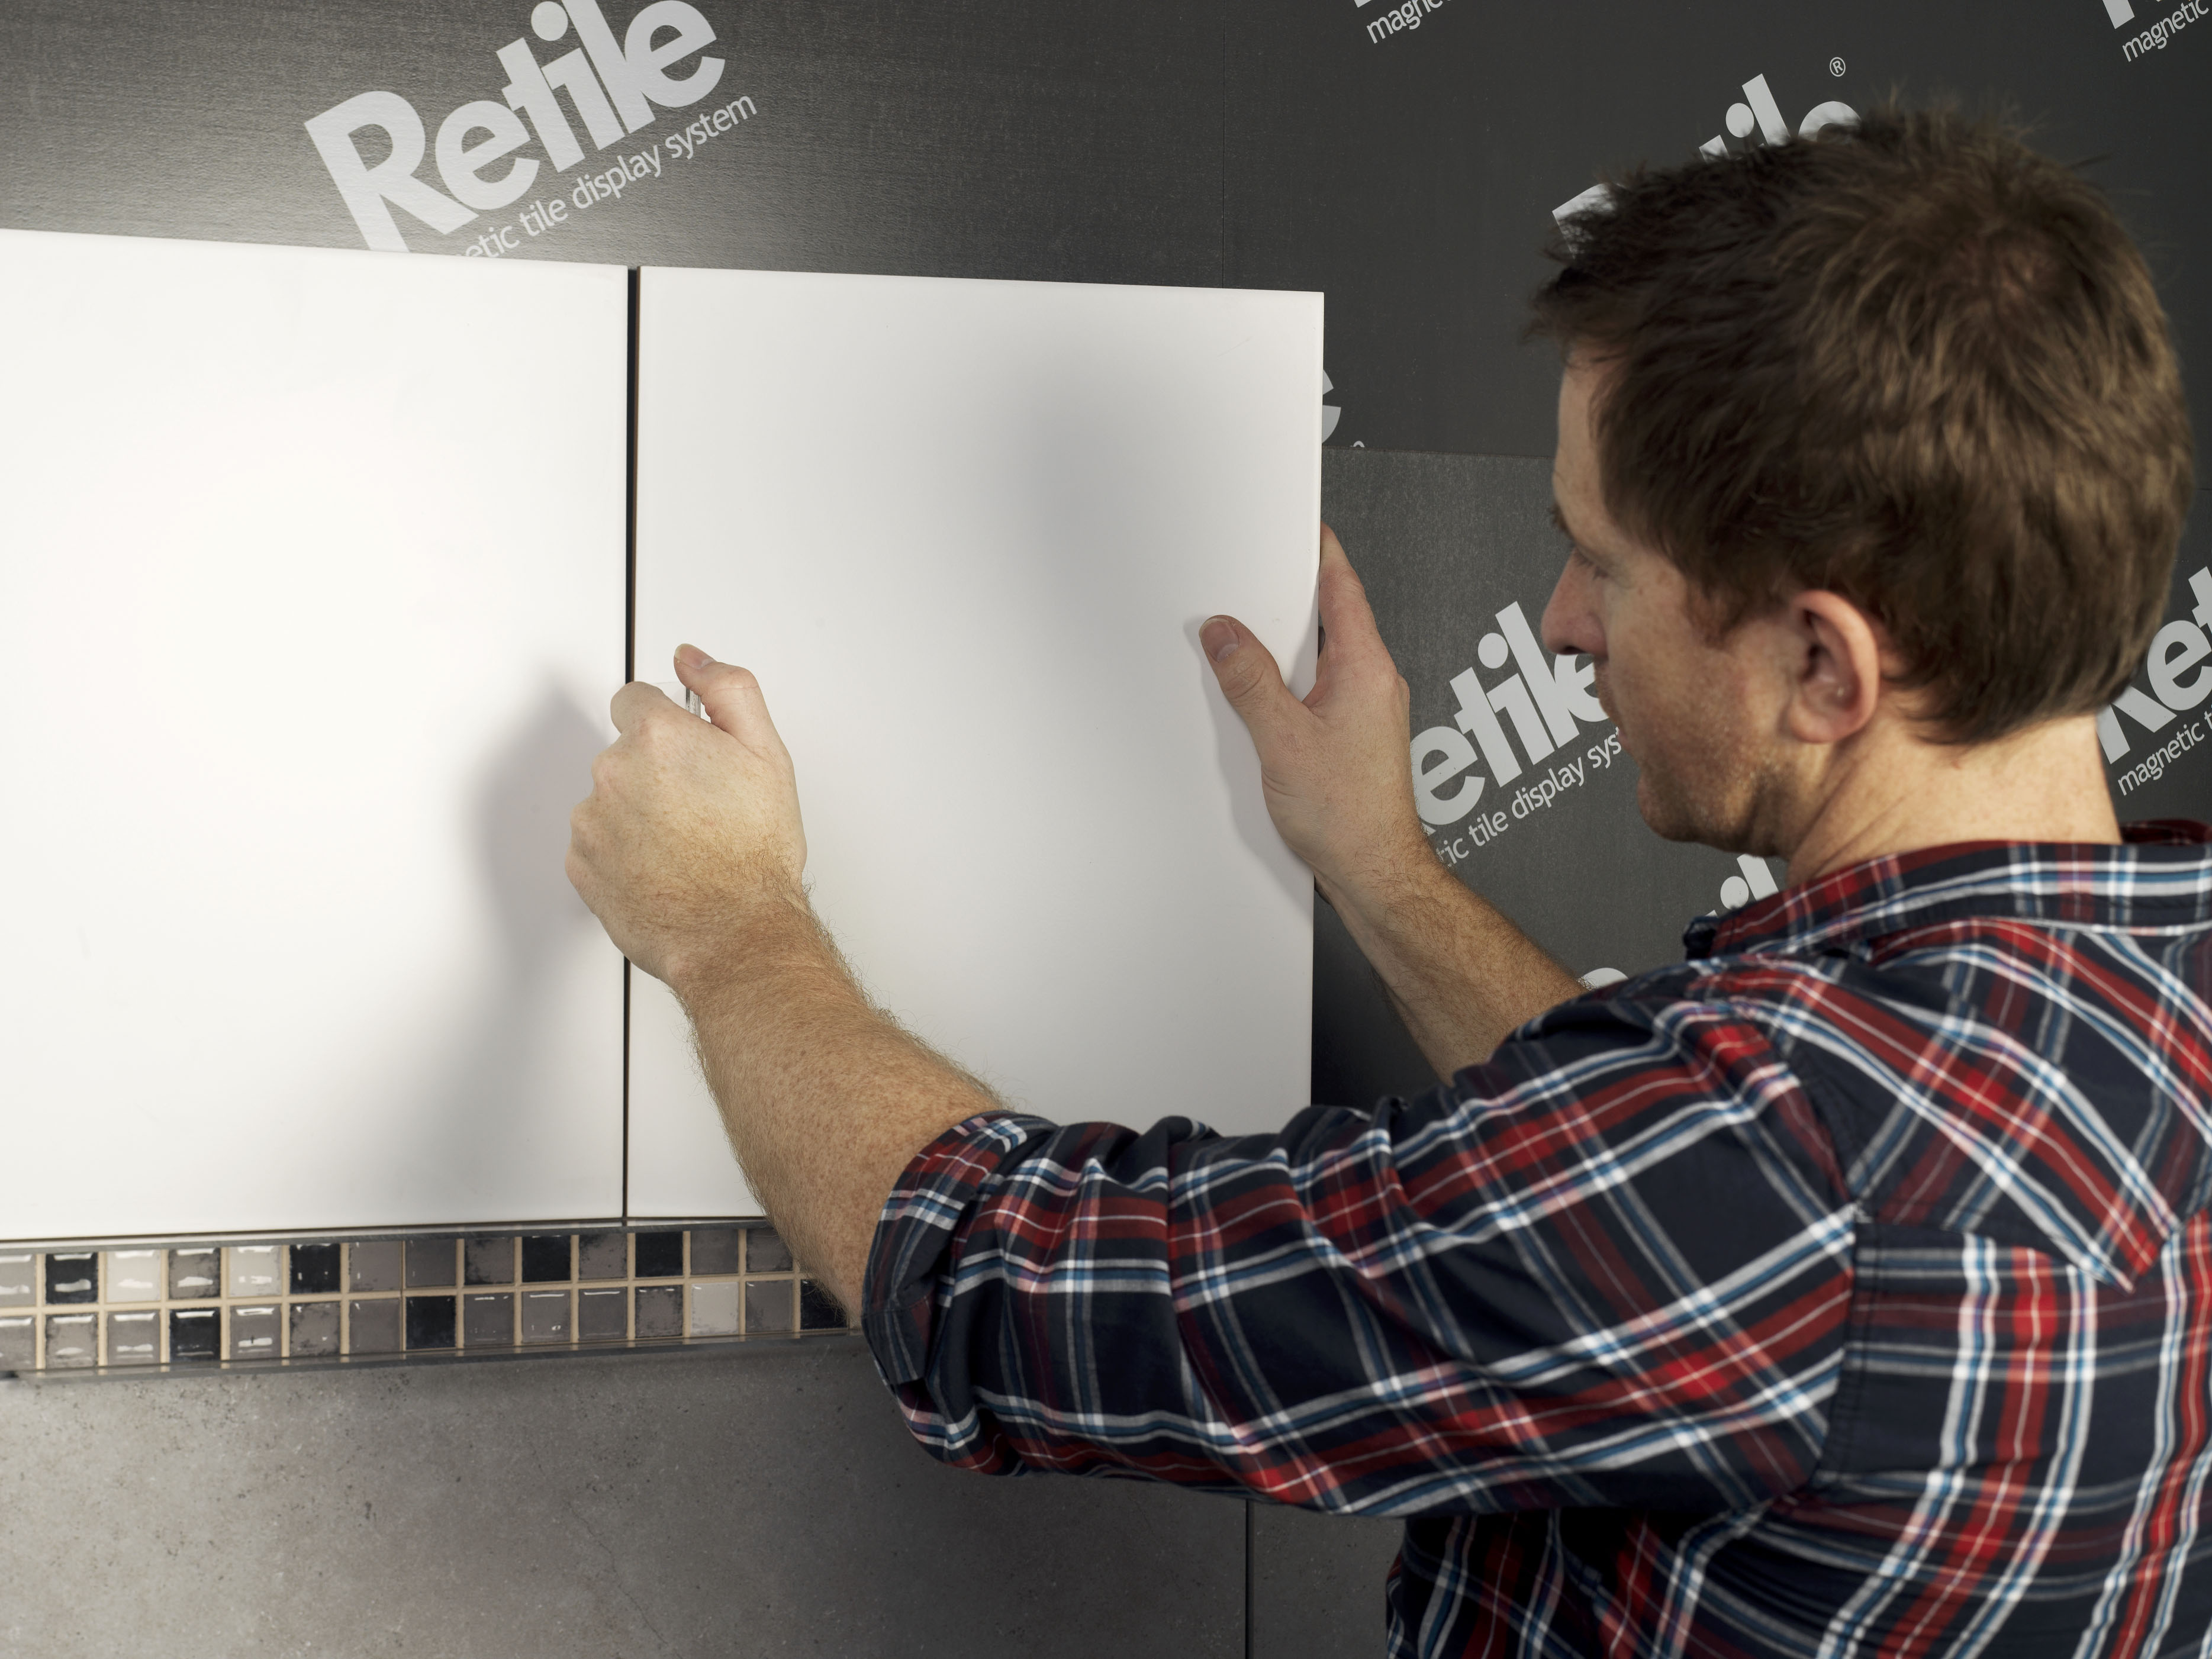 Retile, Magnetic Wall Tiles